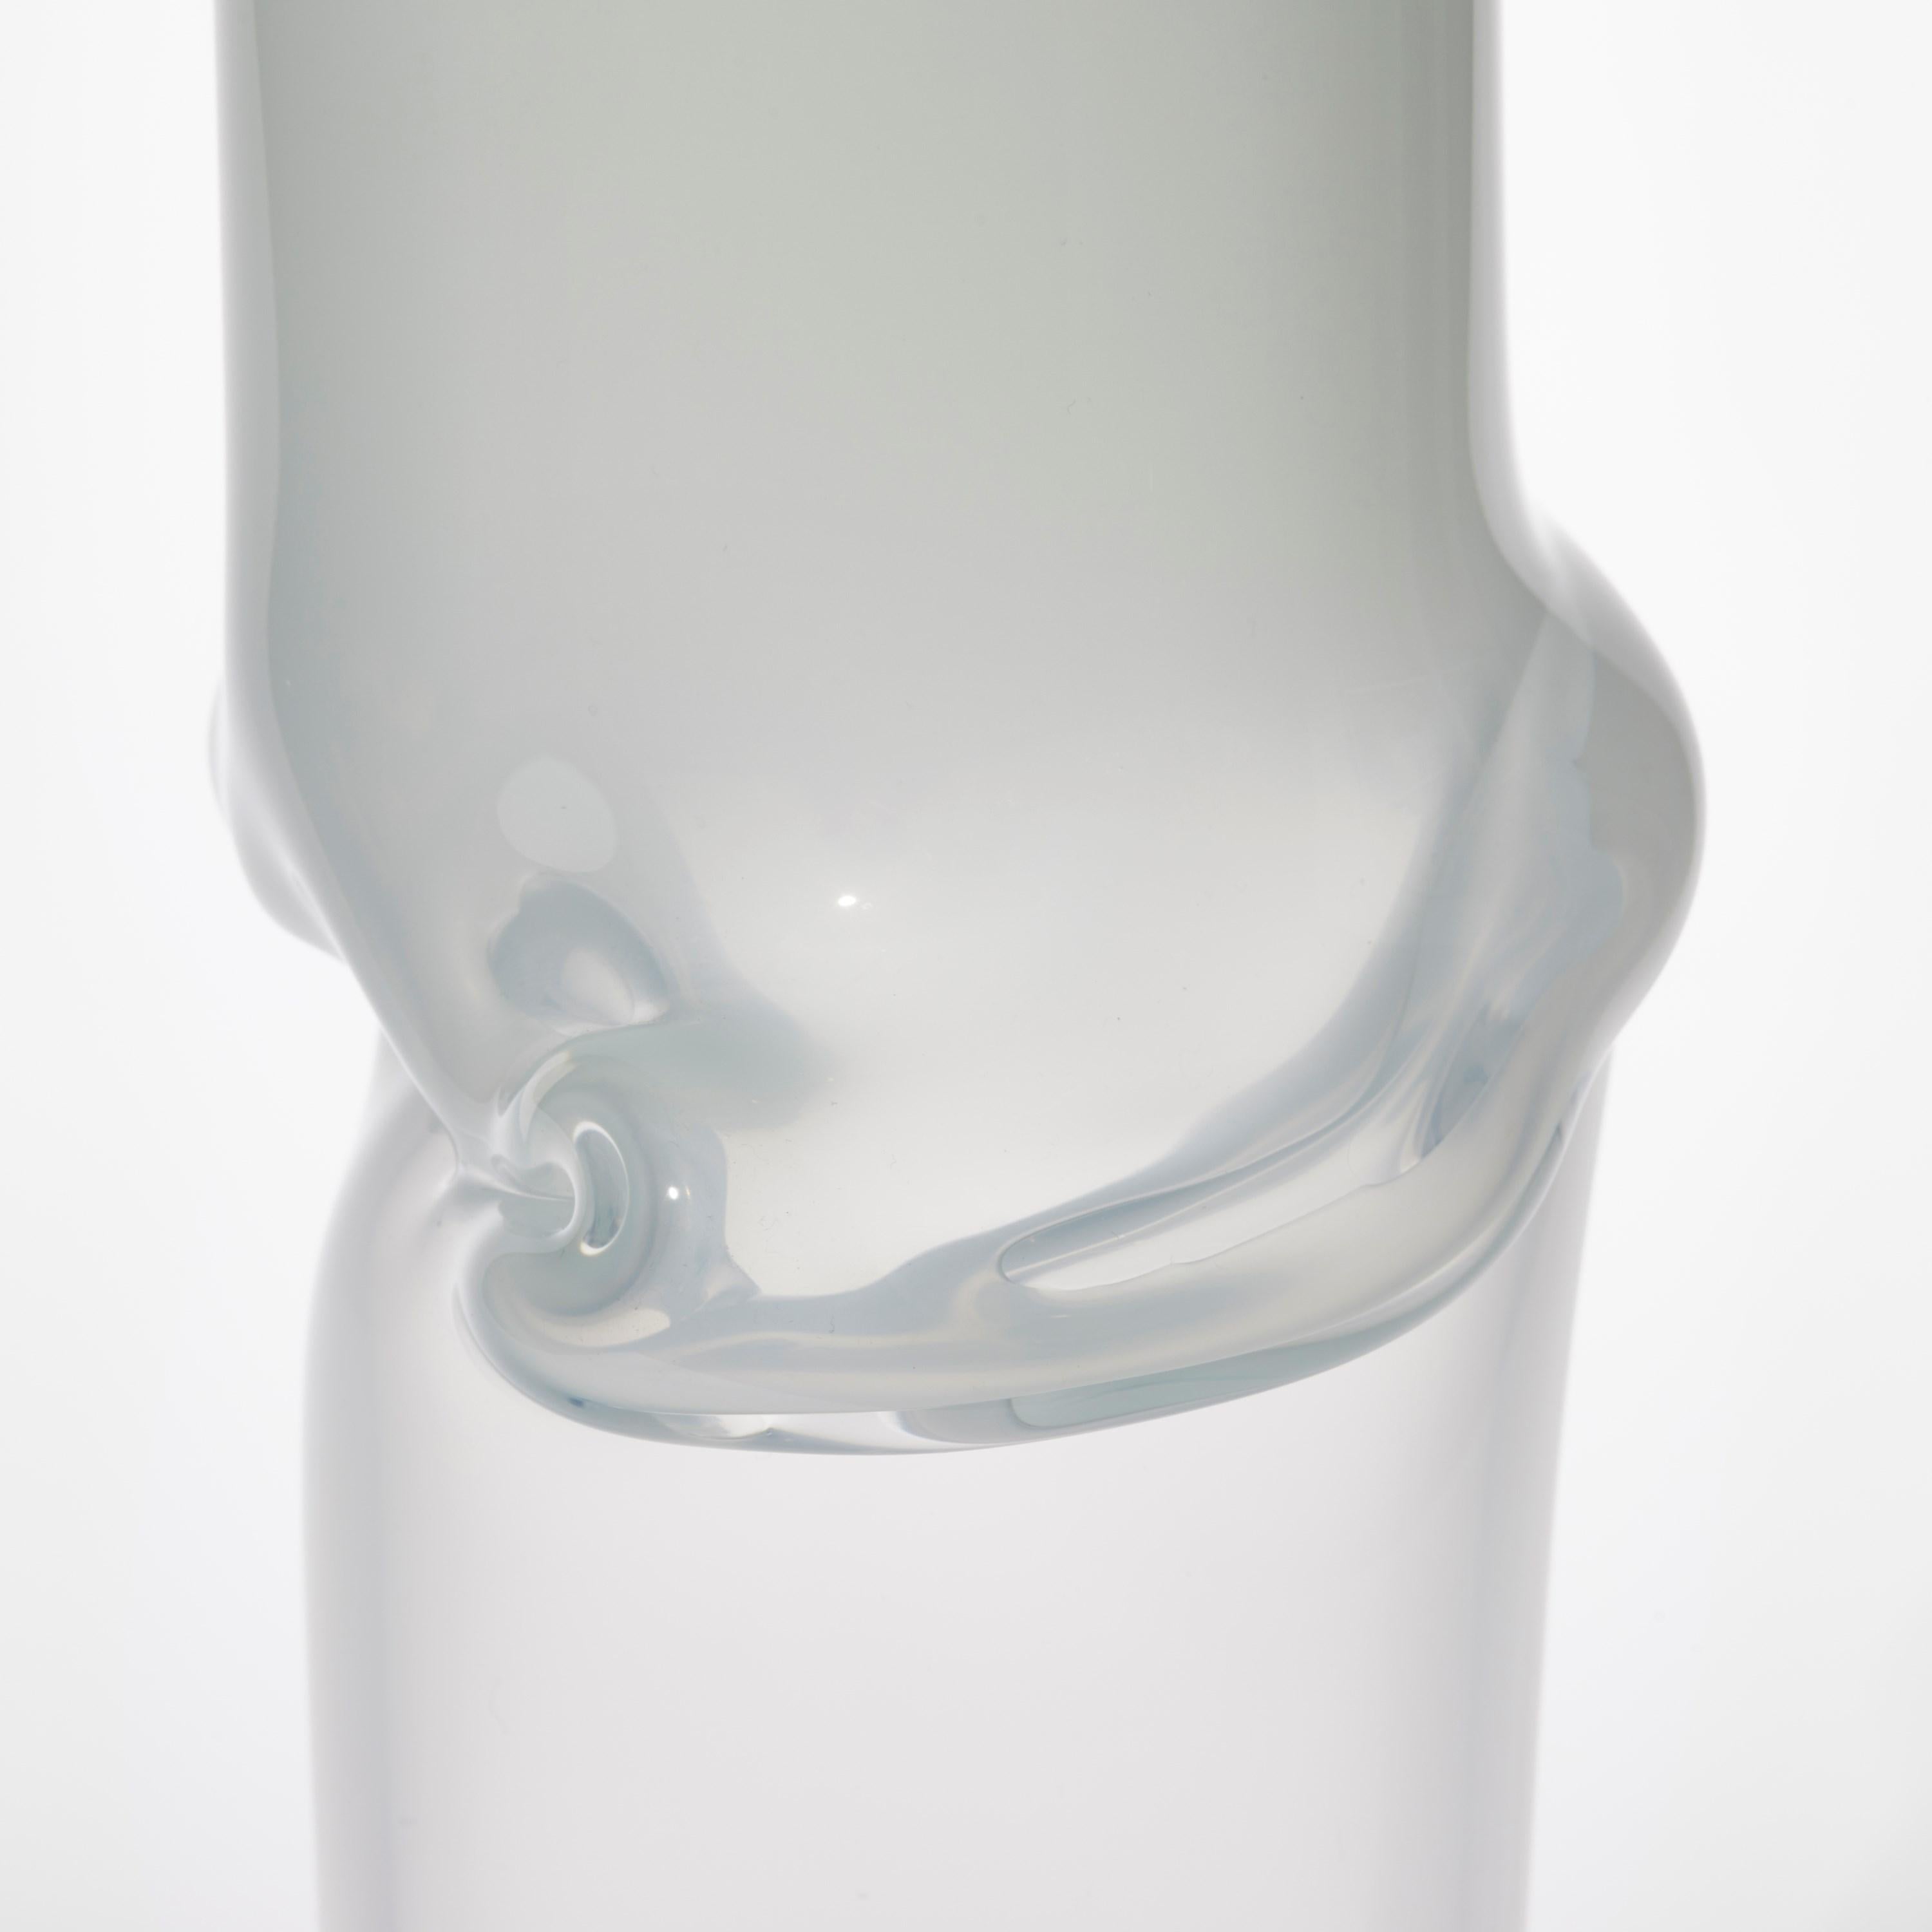 Organic Modern Torsion in Mint 22/01, clear & soft jade glass sculptural vessel by Emma Baker For Sale